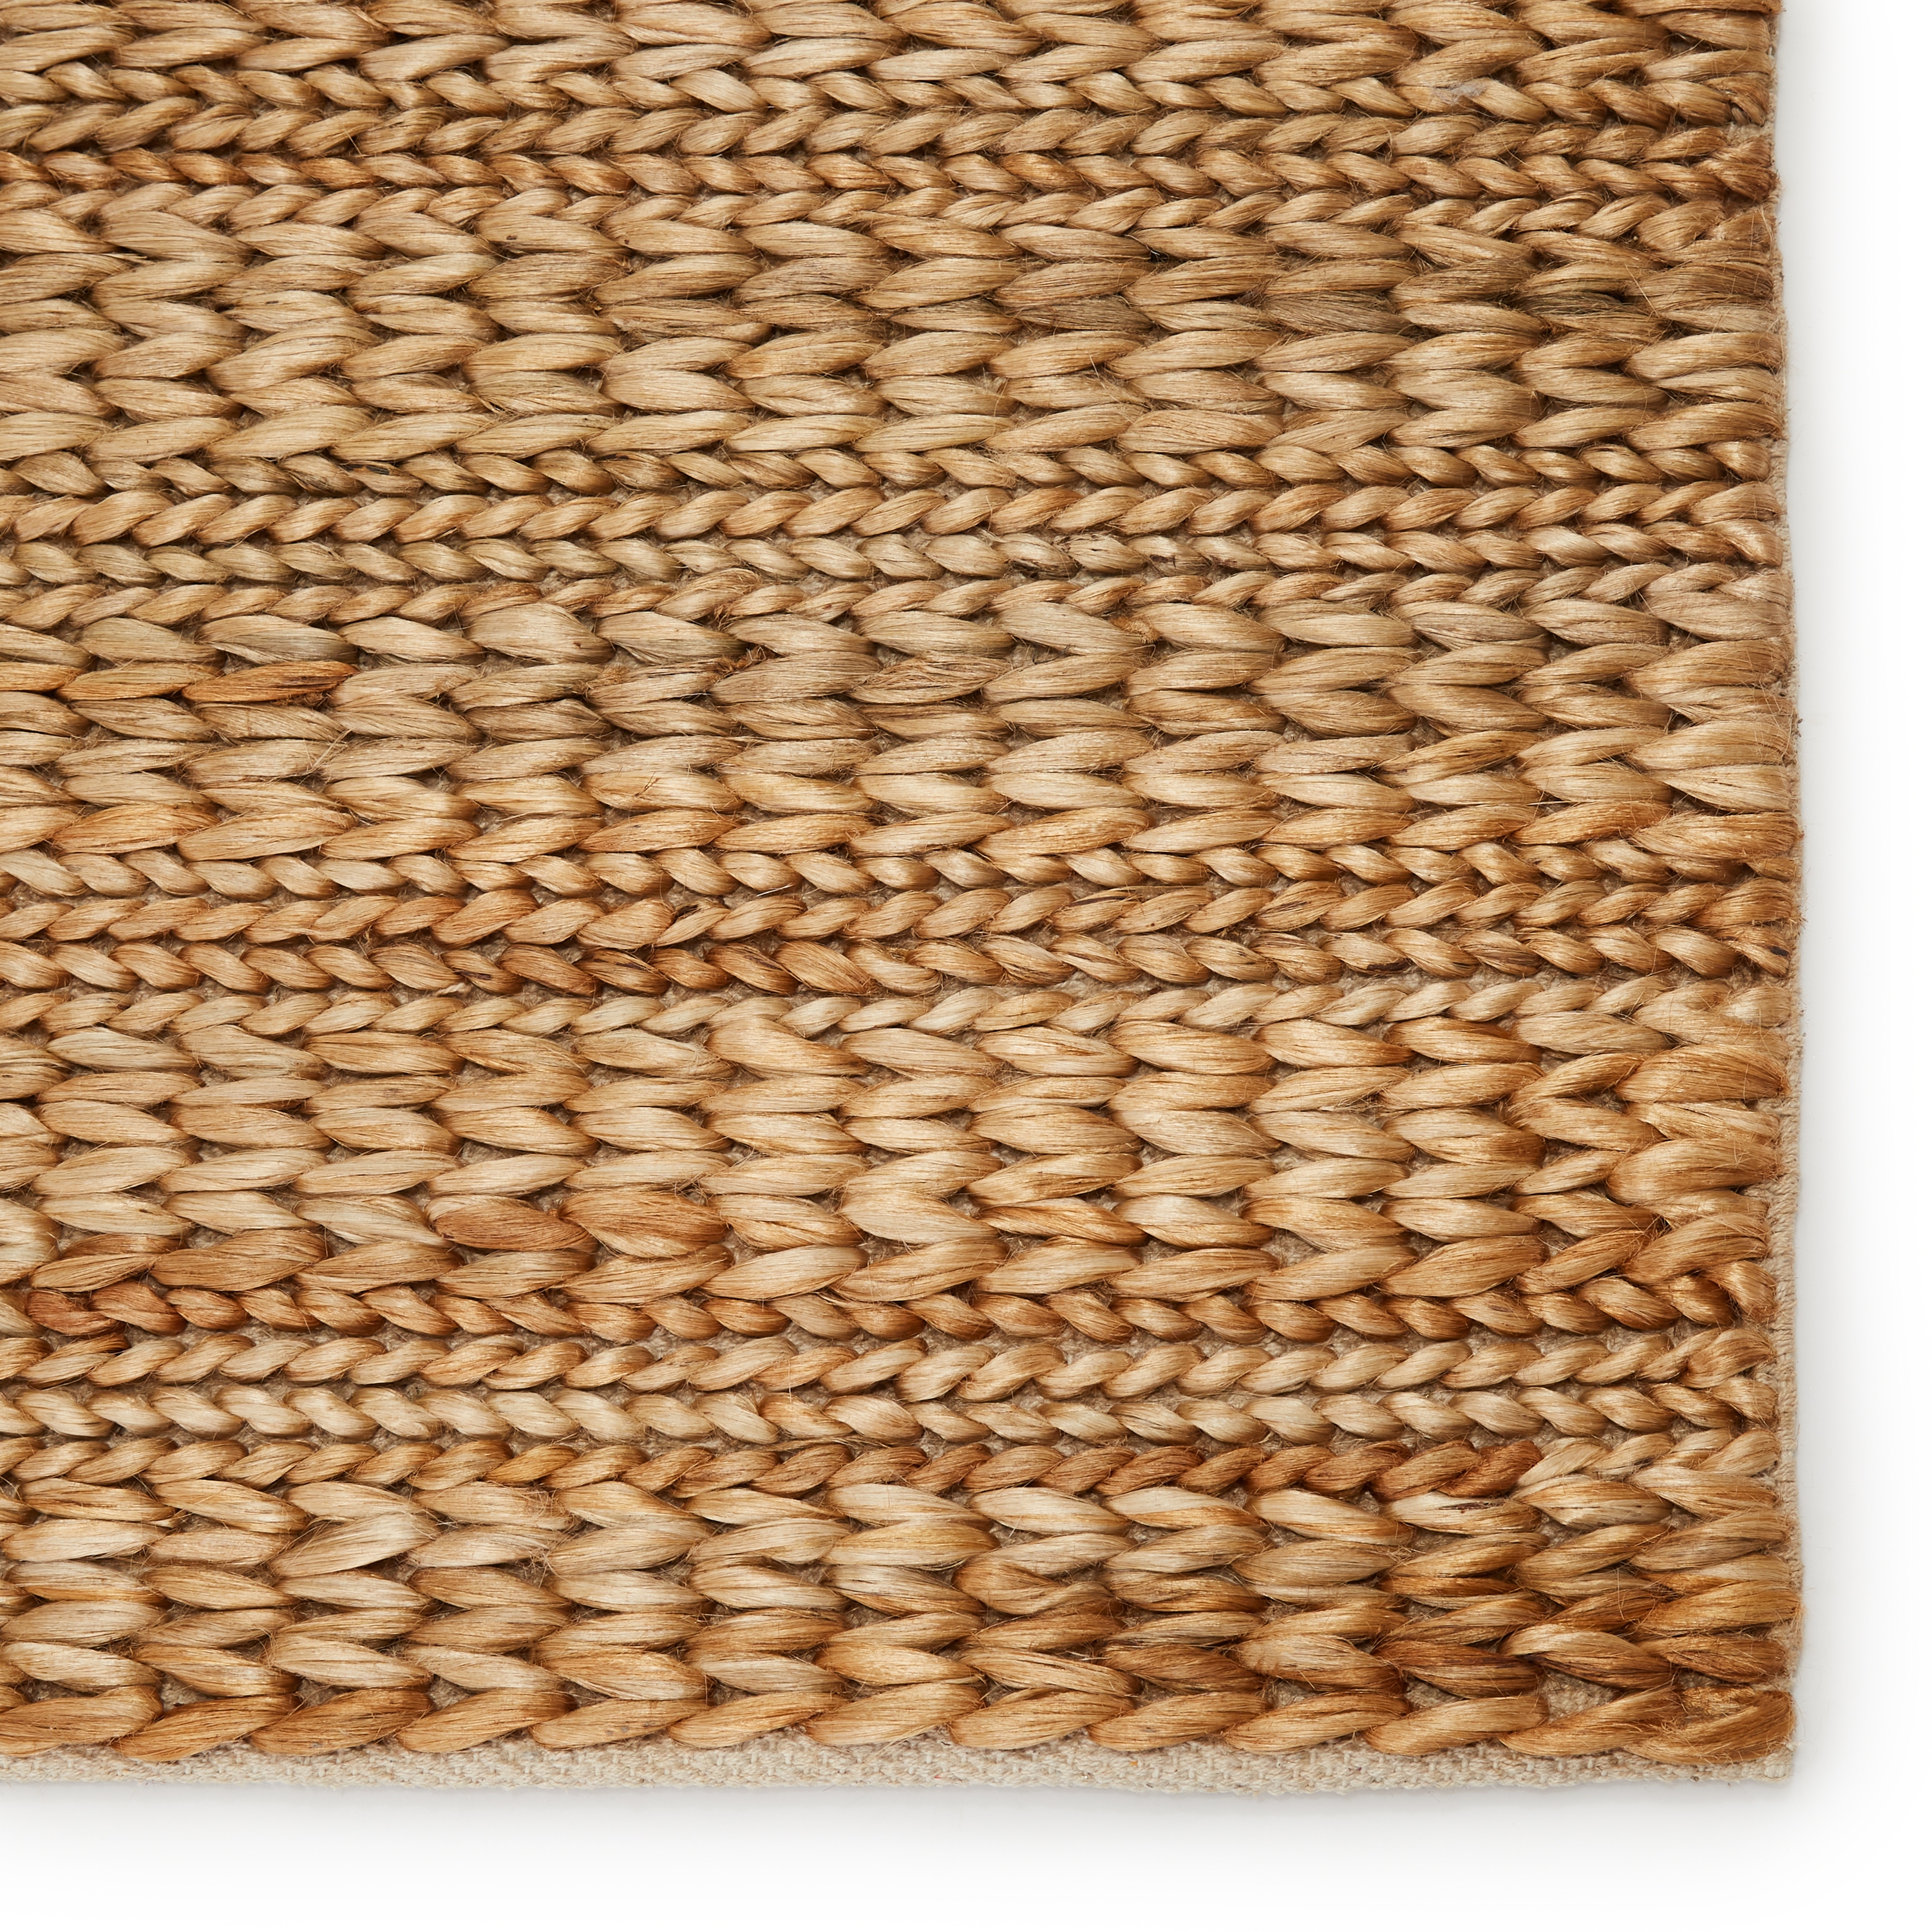 Poncy Natural Solid Tan Area Rug (9'X12') - Image 3